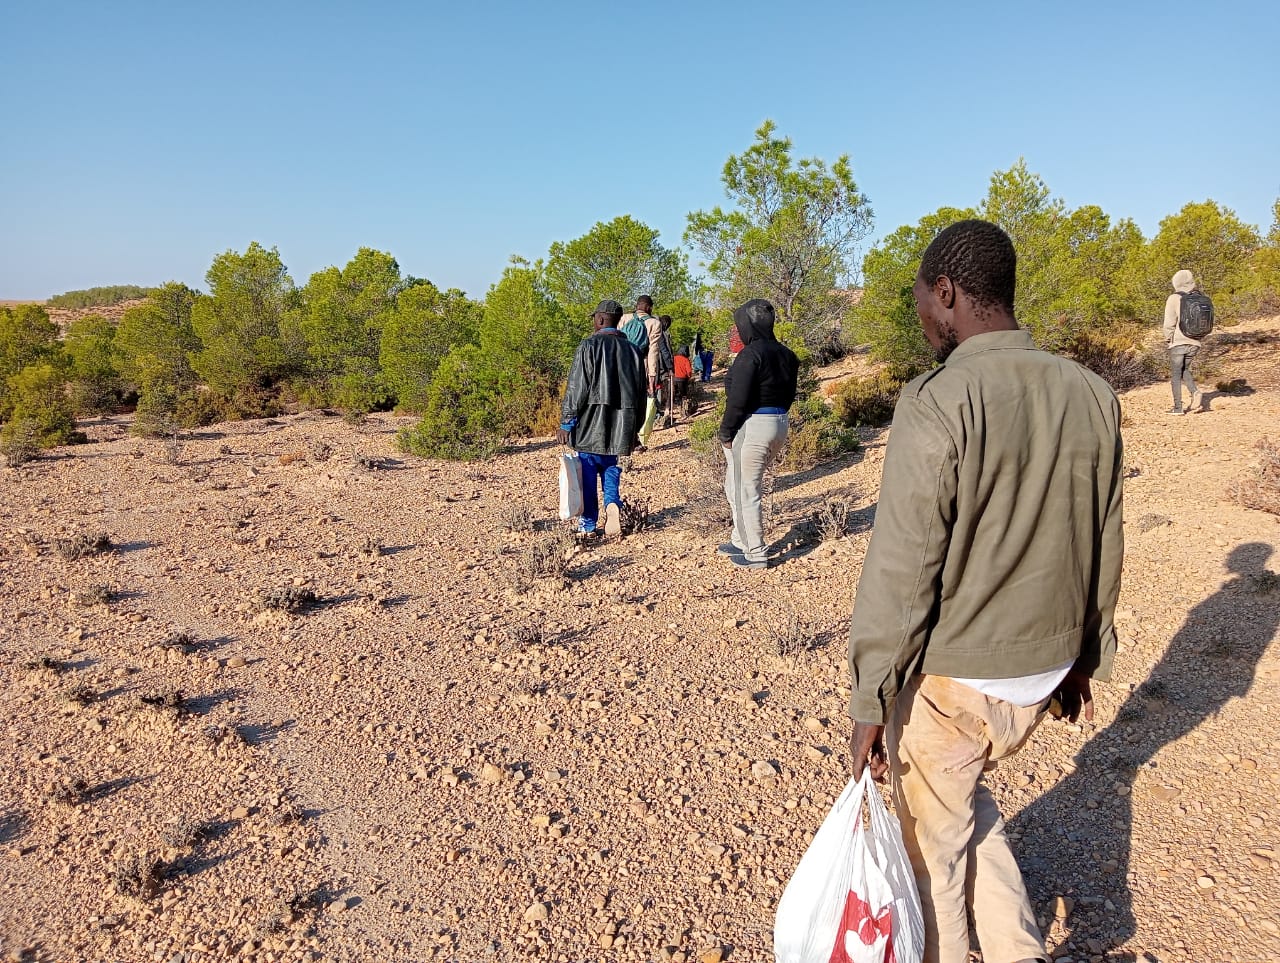 Abandoned in desert: EU accused of migrant ‘dumping’ in North Africa, Sahel